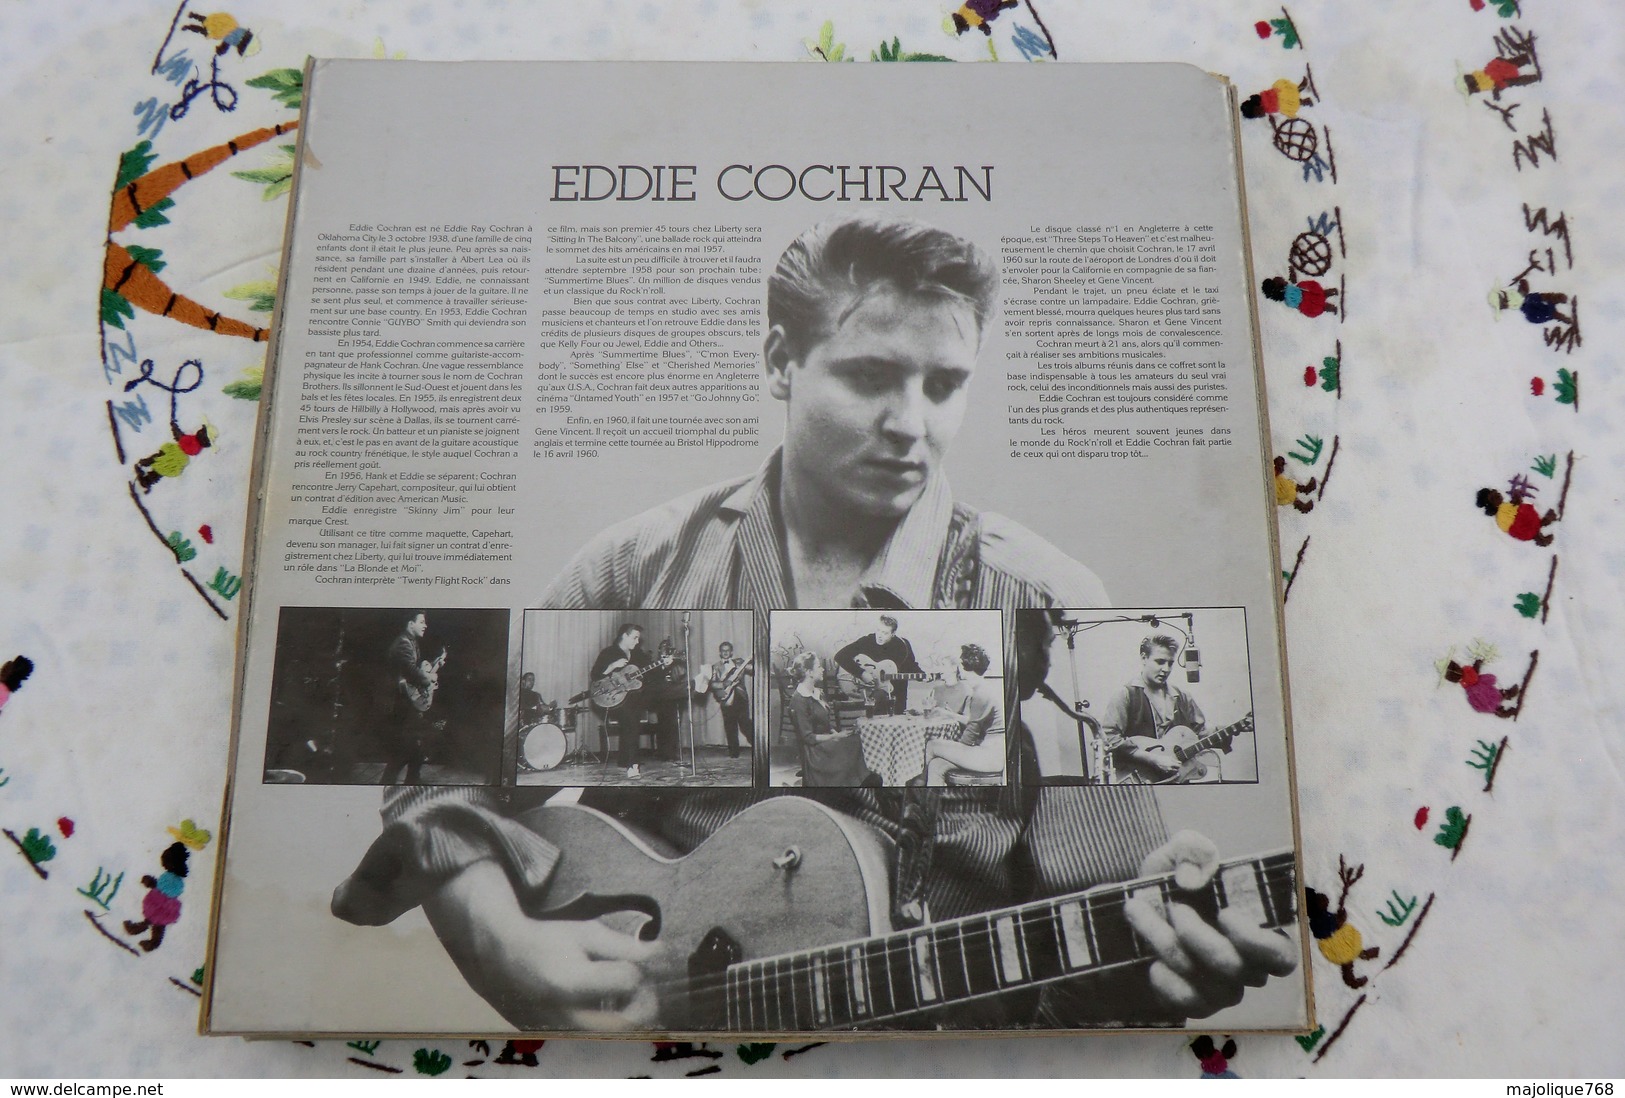 disque de Eddie Cochran - Eddie - coffret 3 disques liberty trio 1551743 - 1984